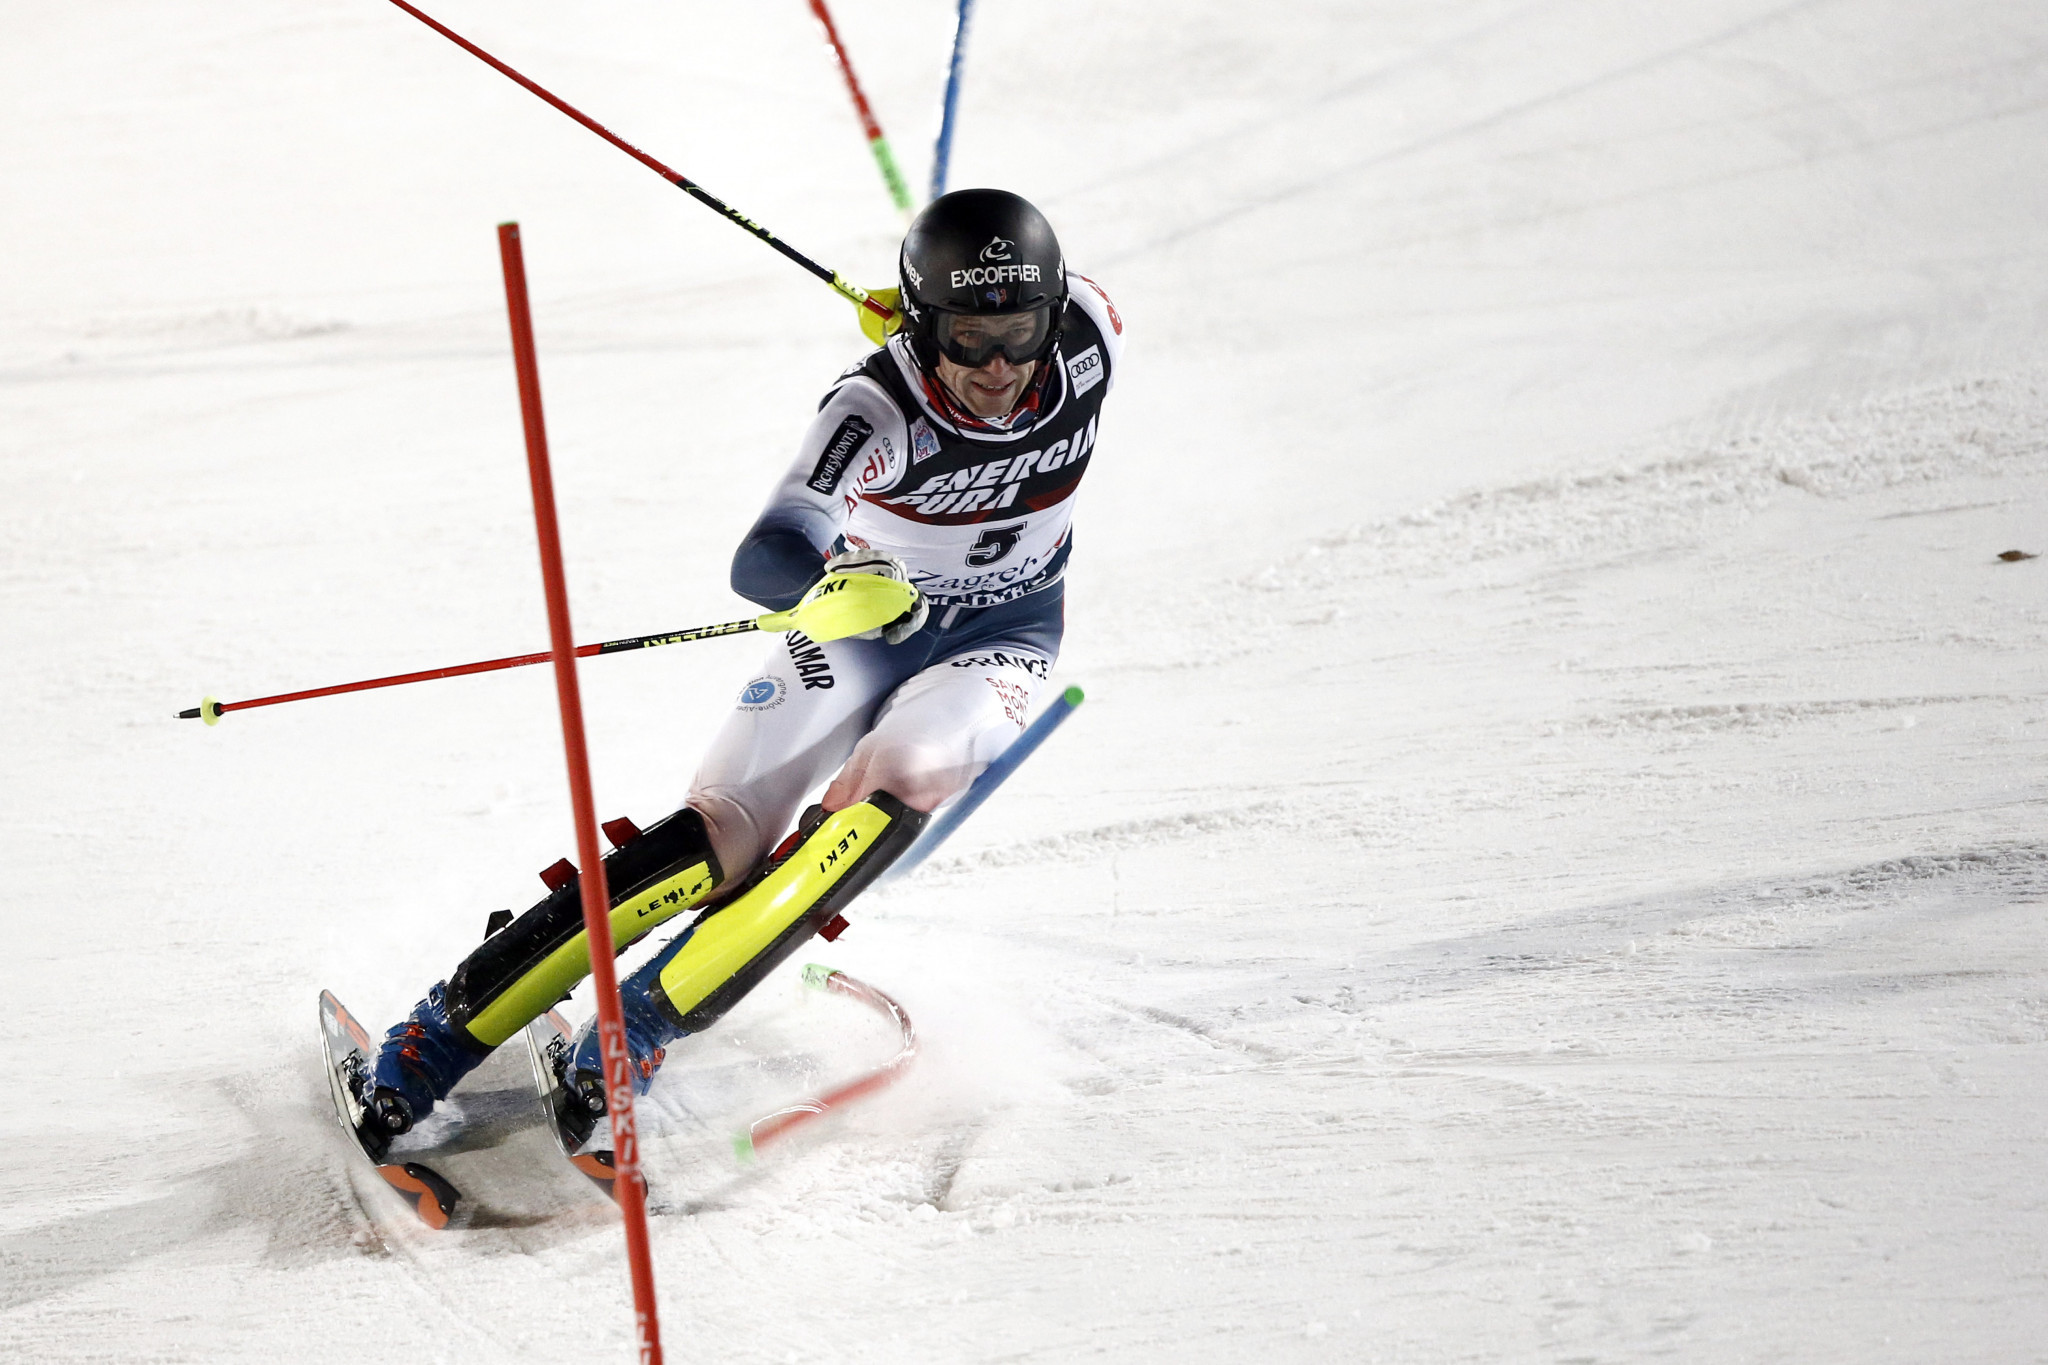 Men's slalom set for FIS Alpine Skiing World Cup in Madonna di Campiglio